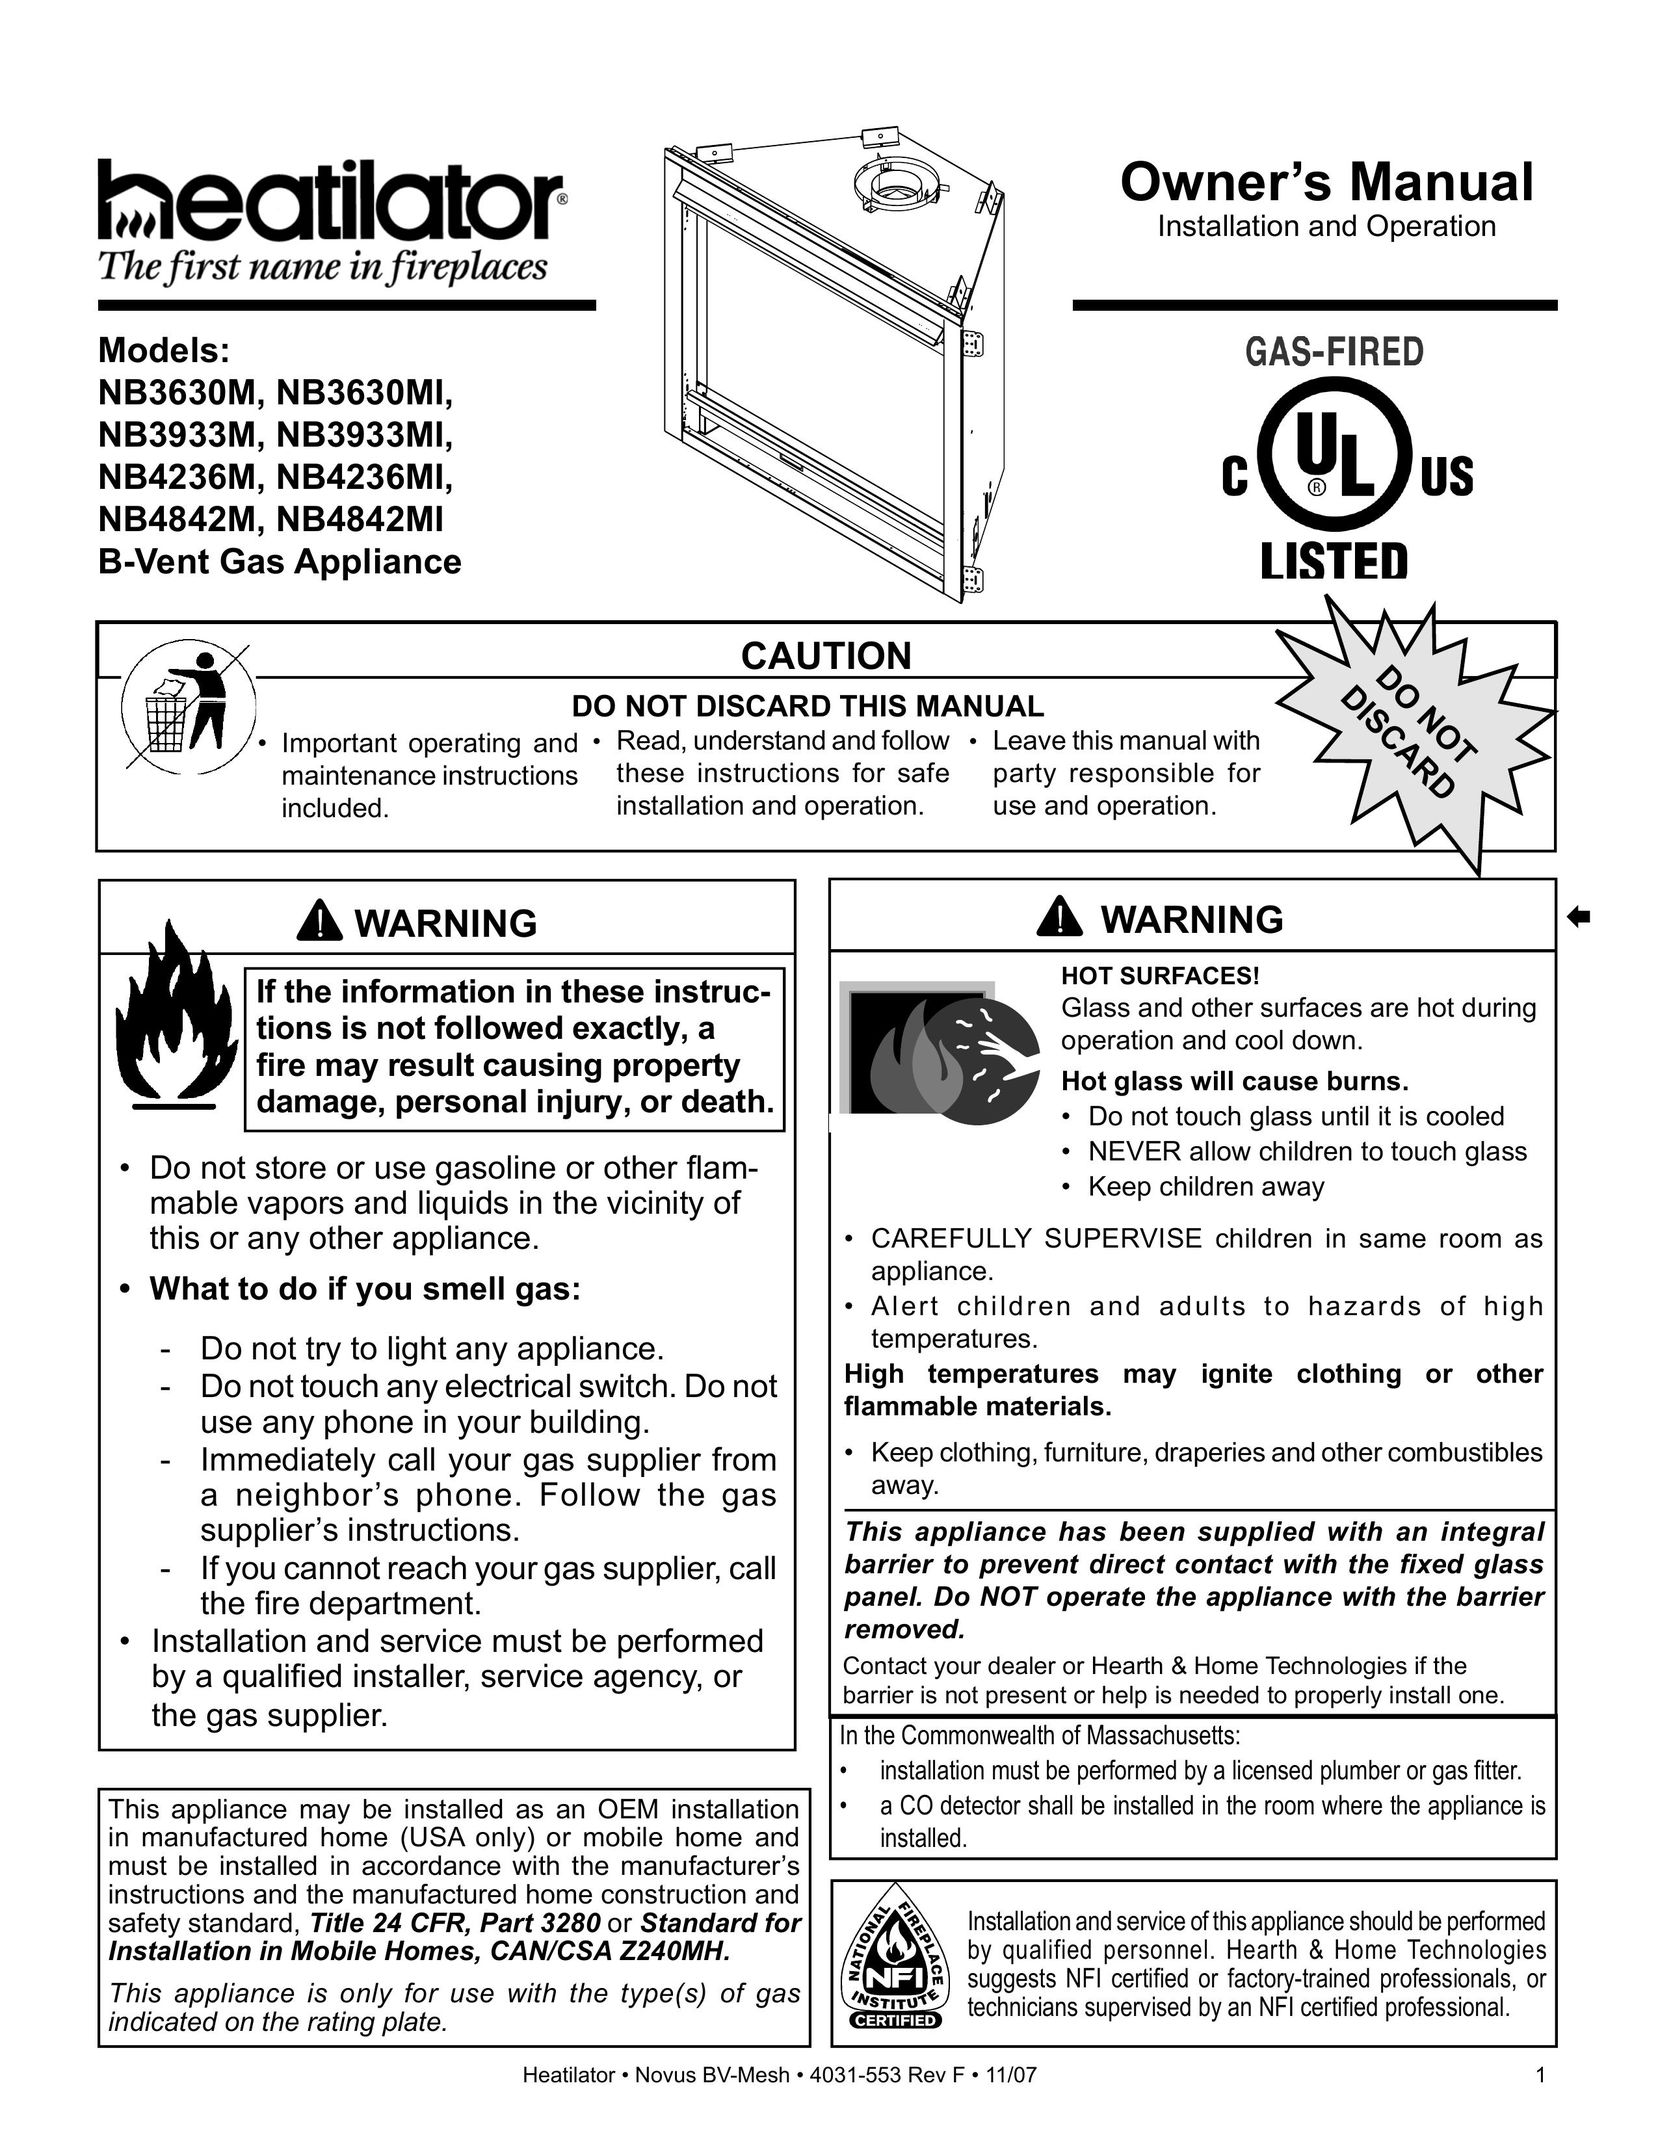 Heatiator NB3933M Indoor Fireplace User Manual